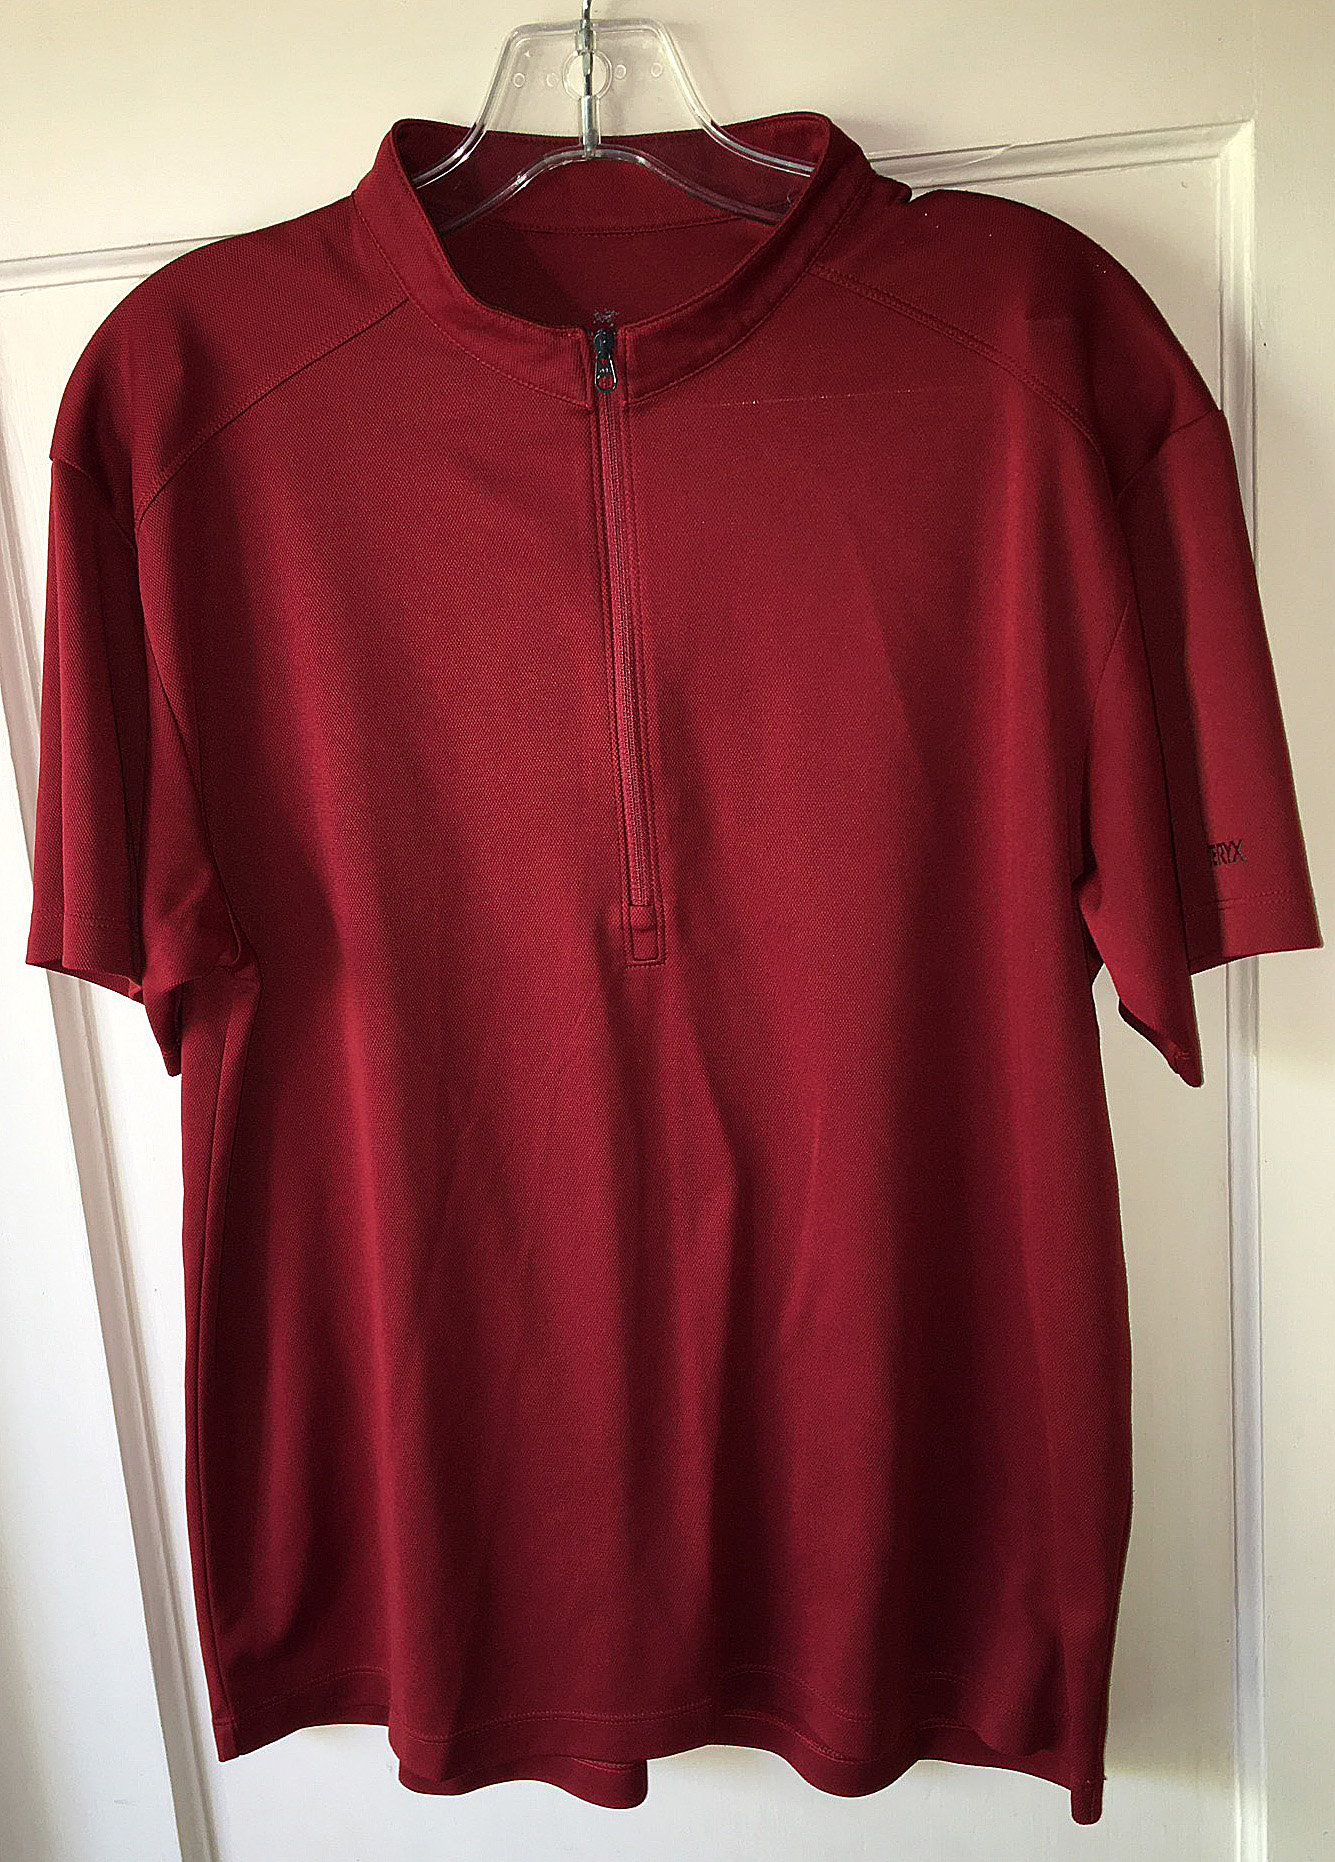 Arcteryx 1/2 Zip Short-Sleeve Performance Pullover Top Shirt - Red ...